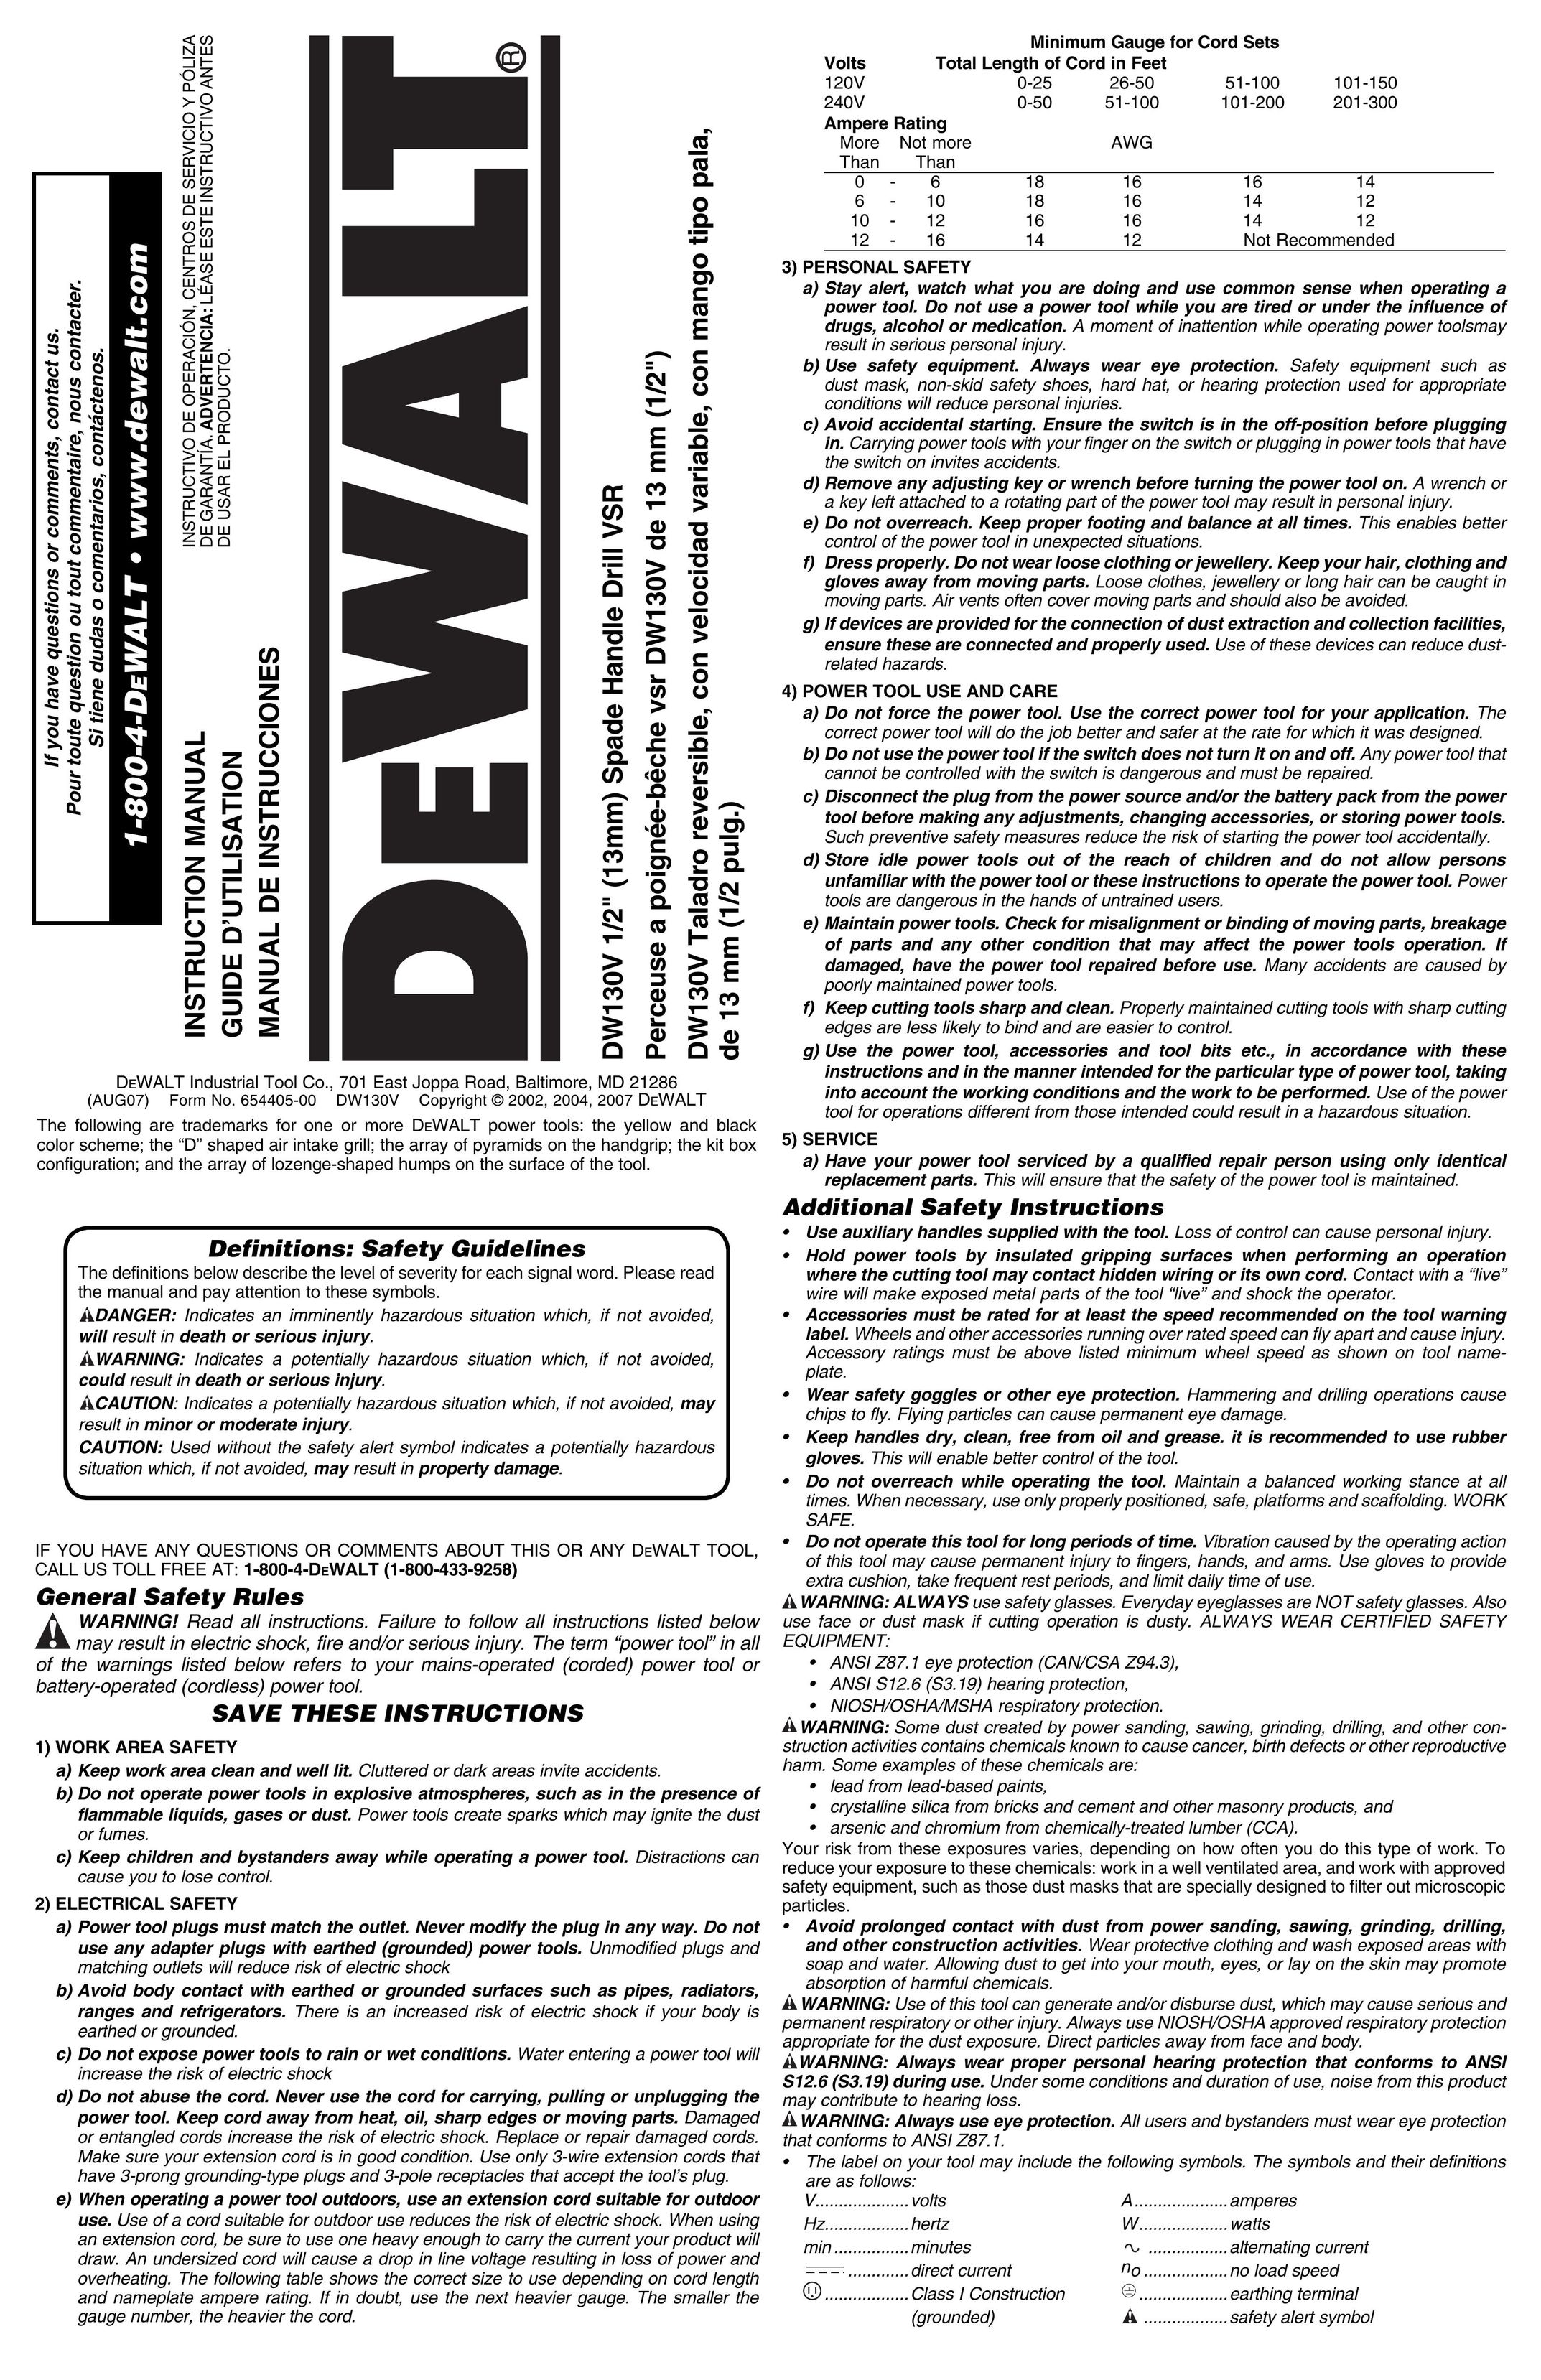 DeWalt DW130V Drill User Manual